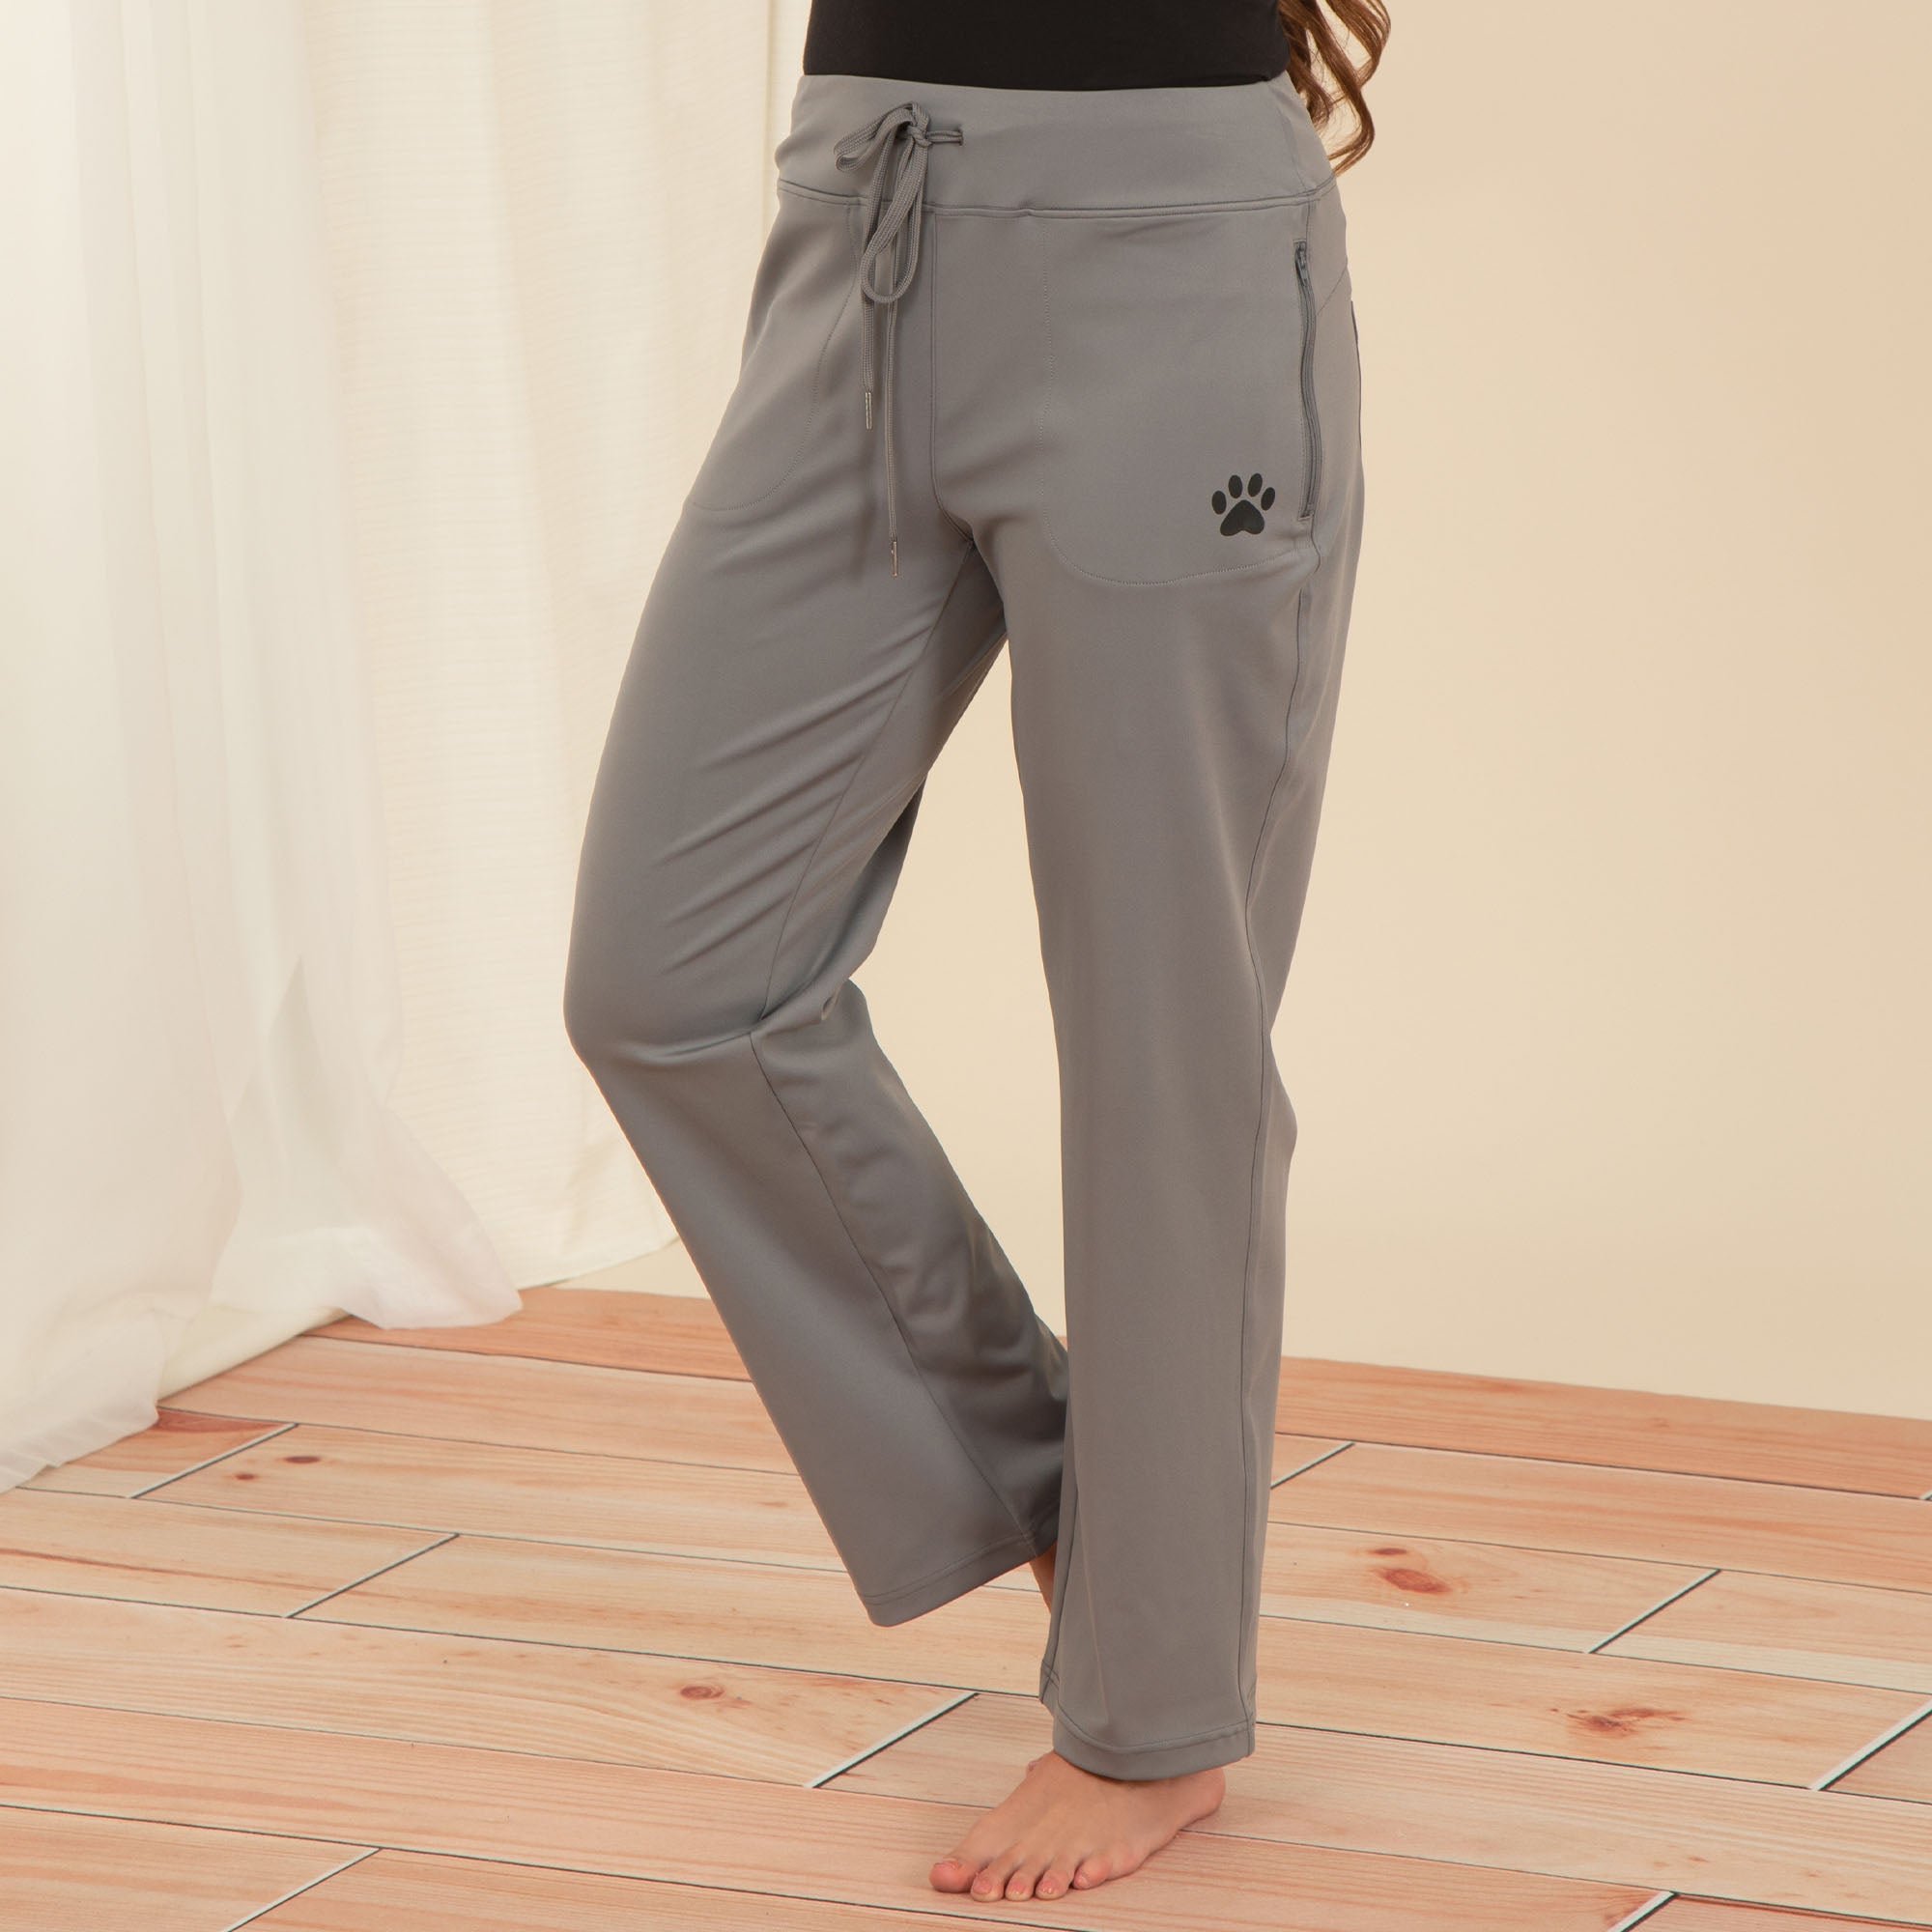 Paw Print Straight Leg Athleisure Pants - Gray - XL